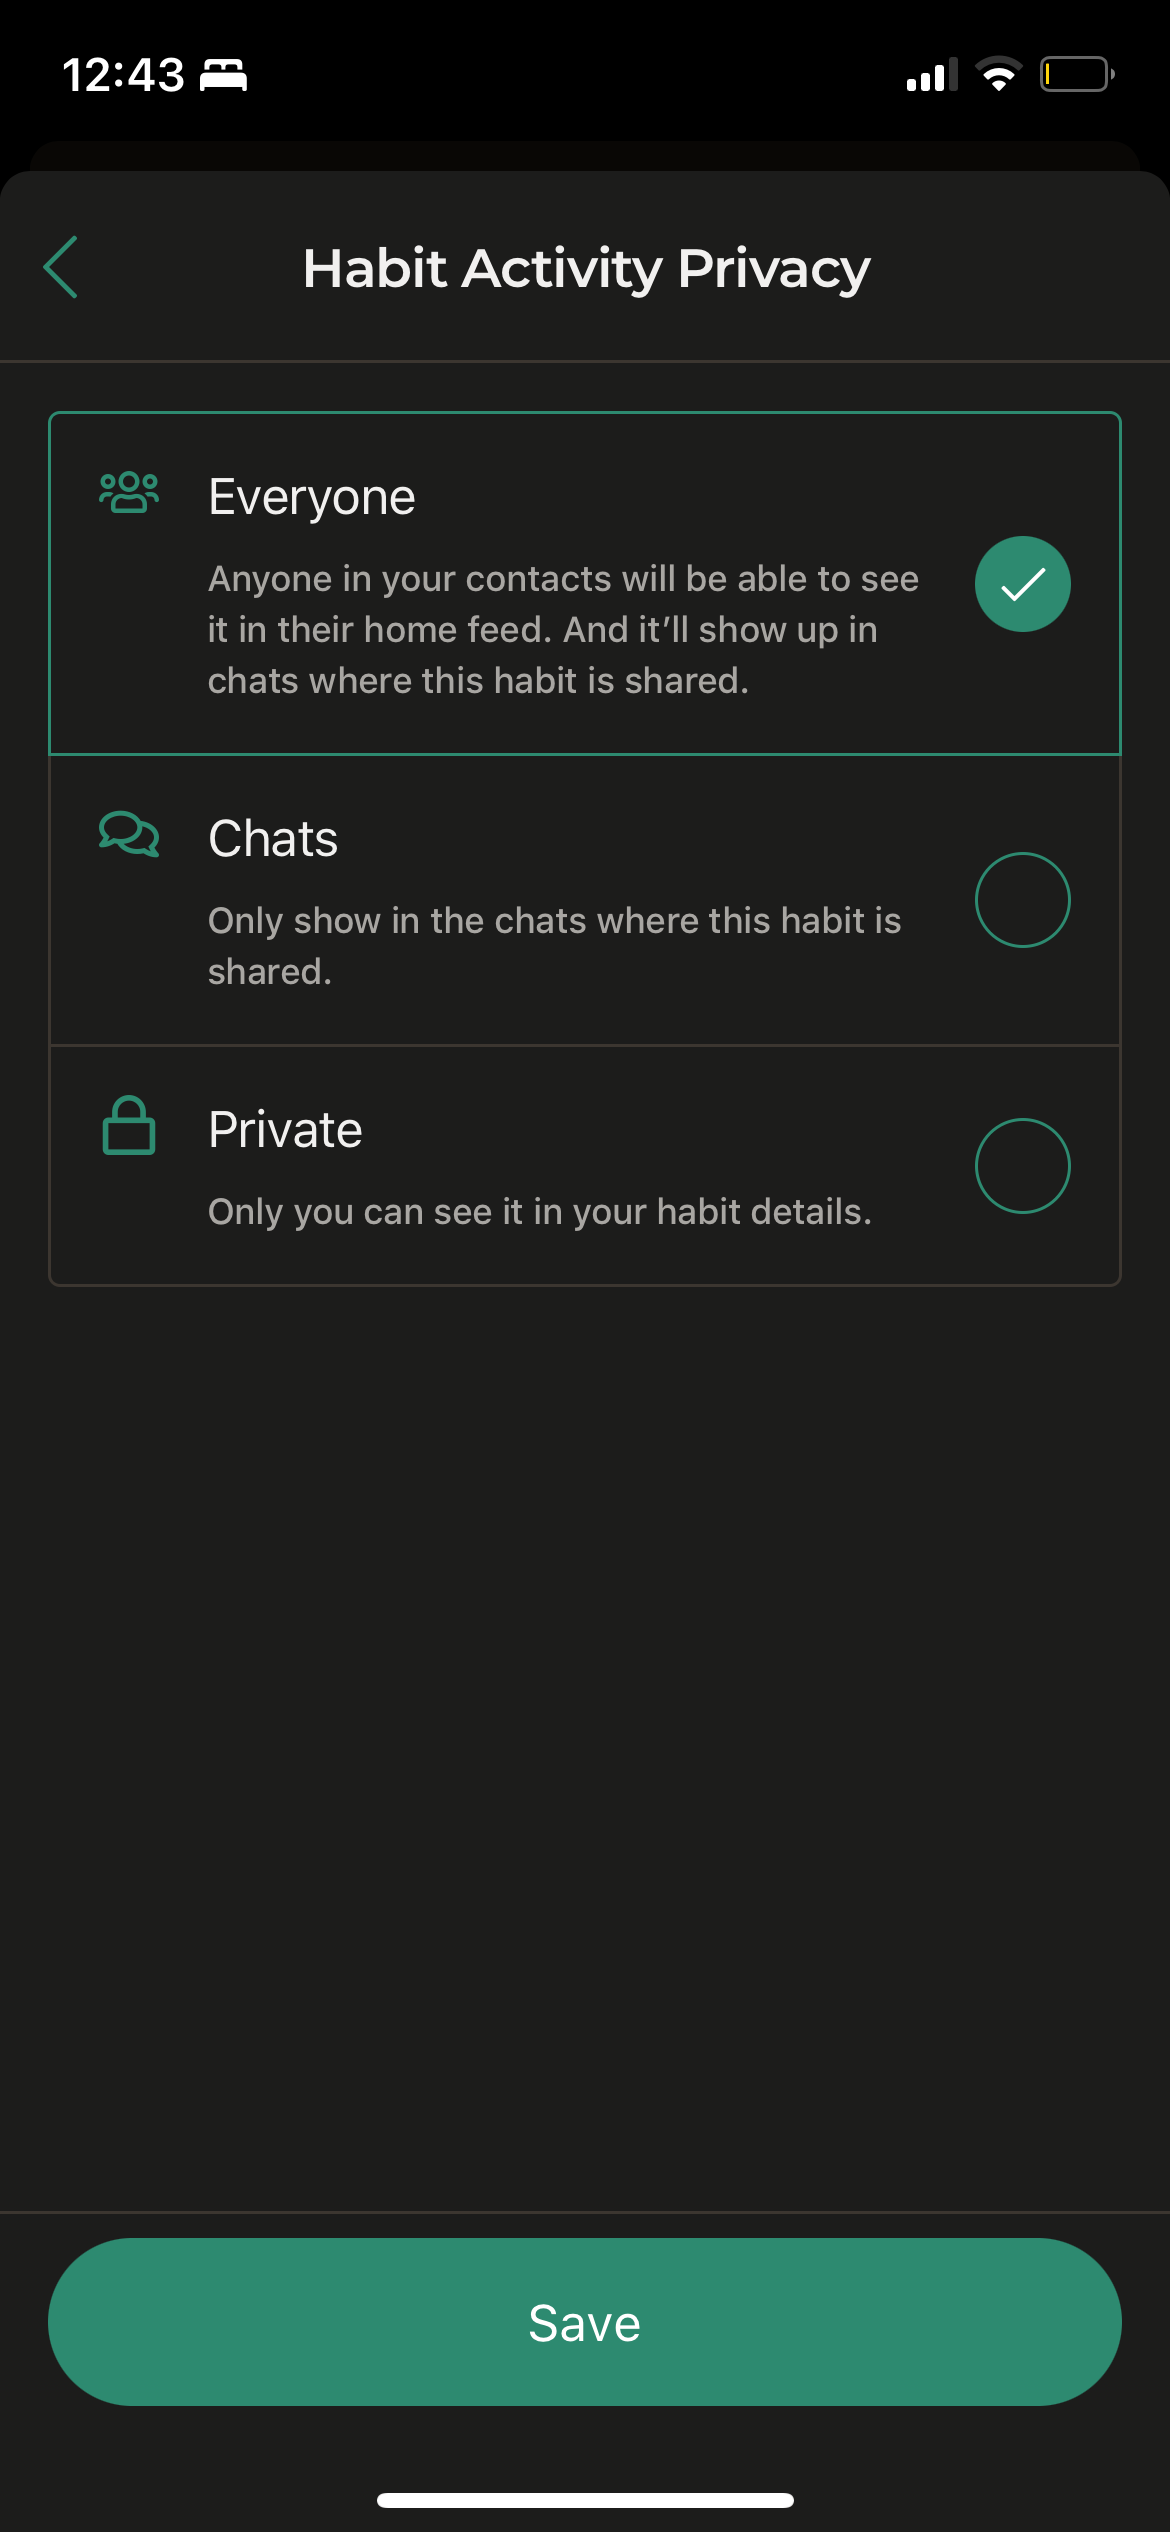 Habit Activity Privacy in the Kin App